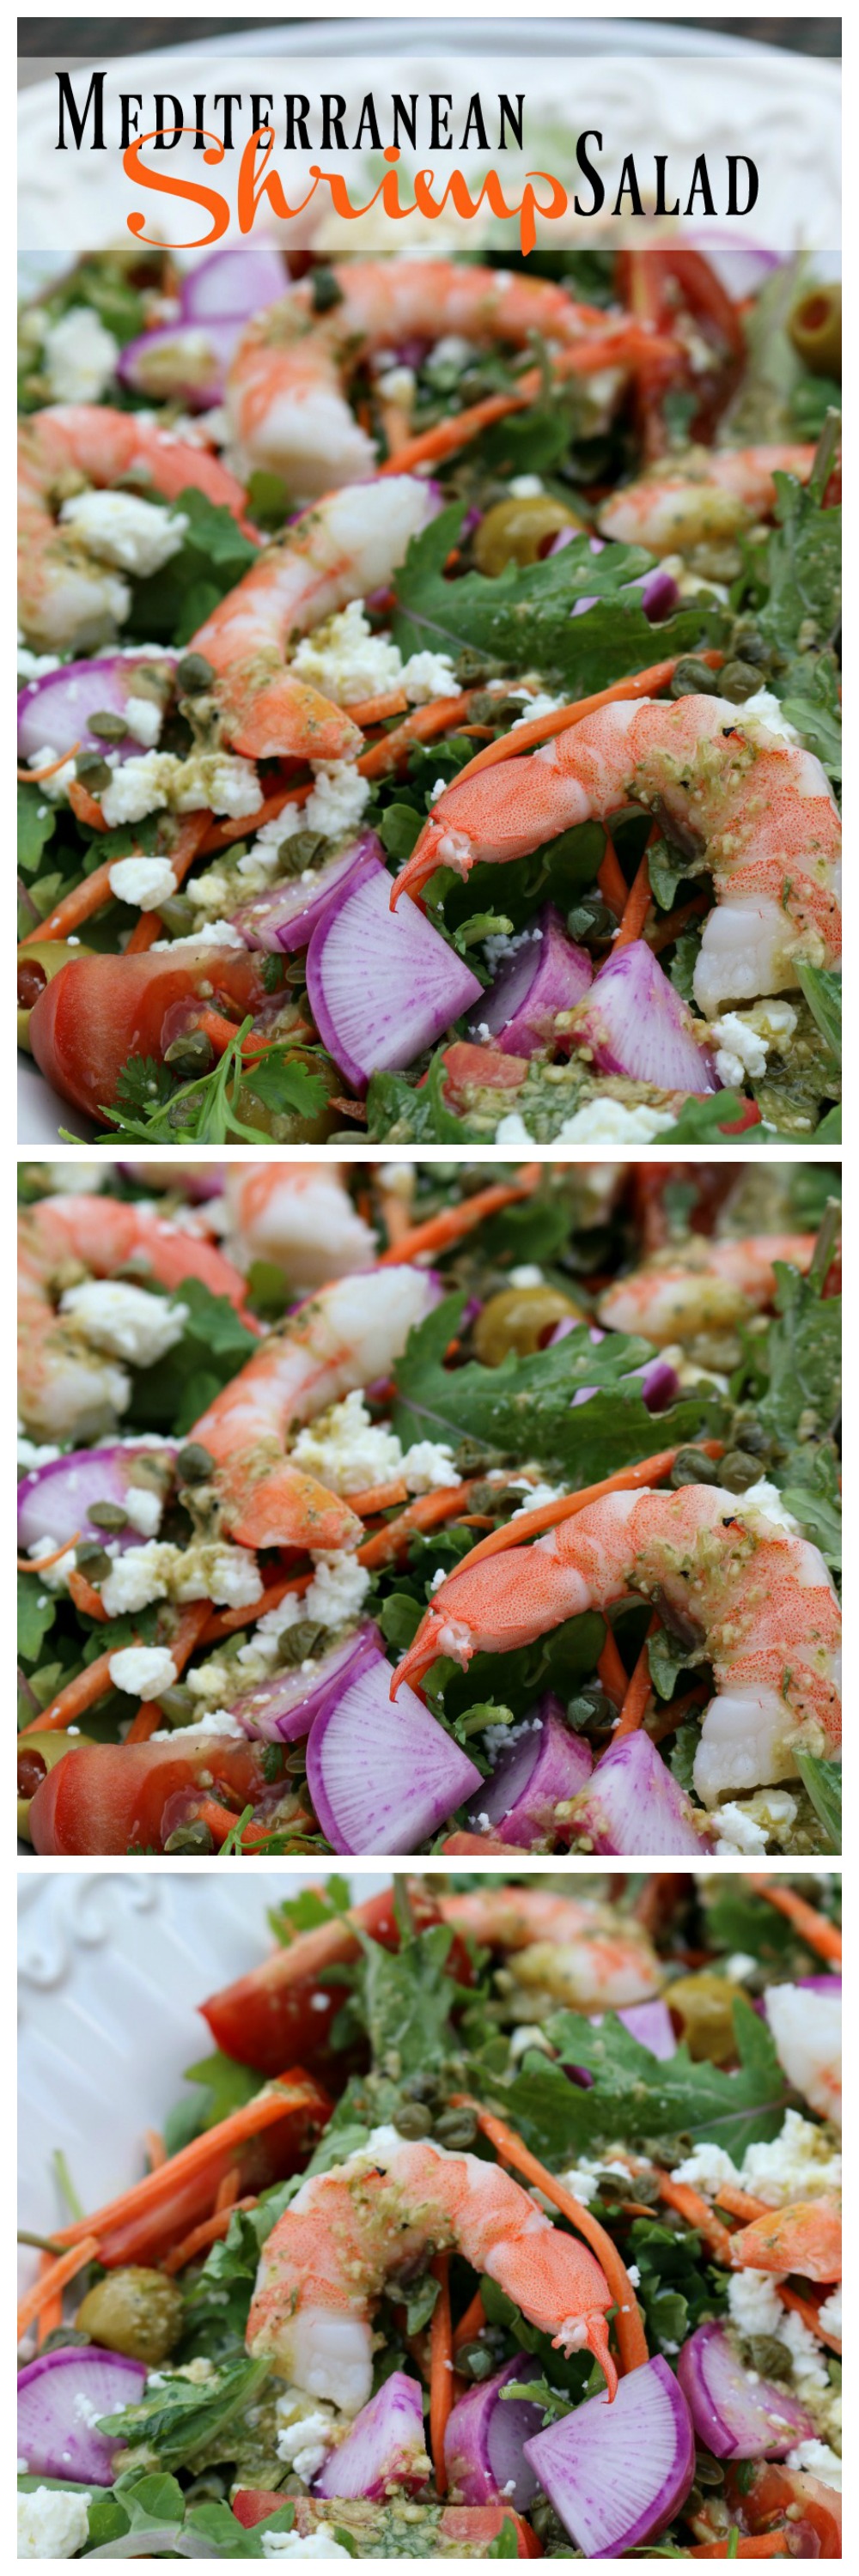 Mediterranean Shrimp Salad CeceliasGoodStuff.com Good Food for Good People